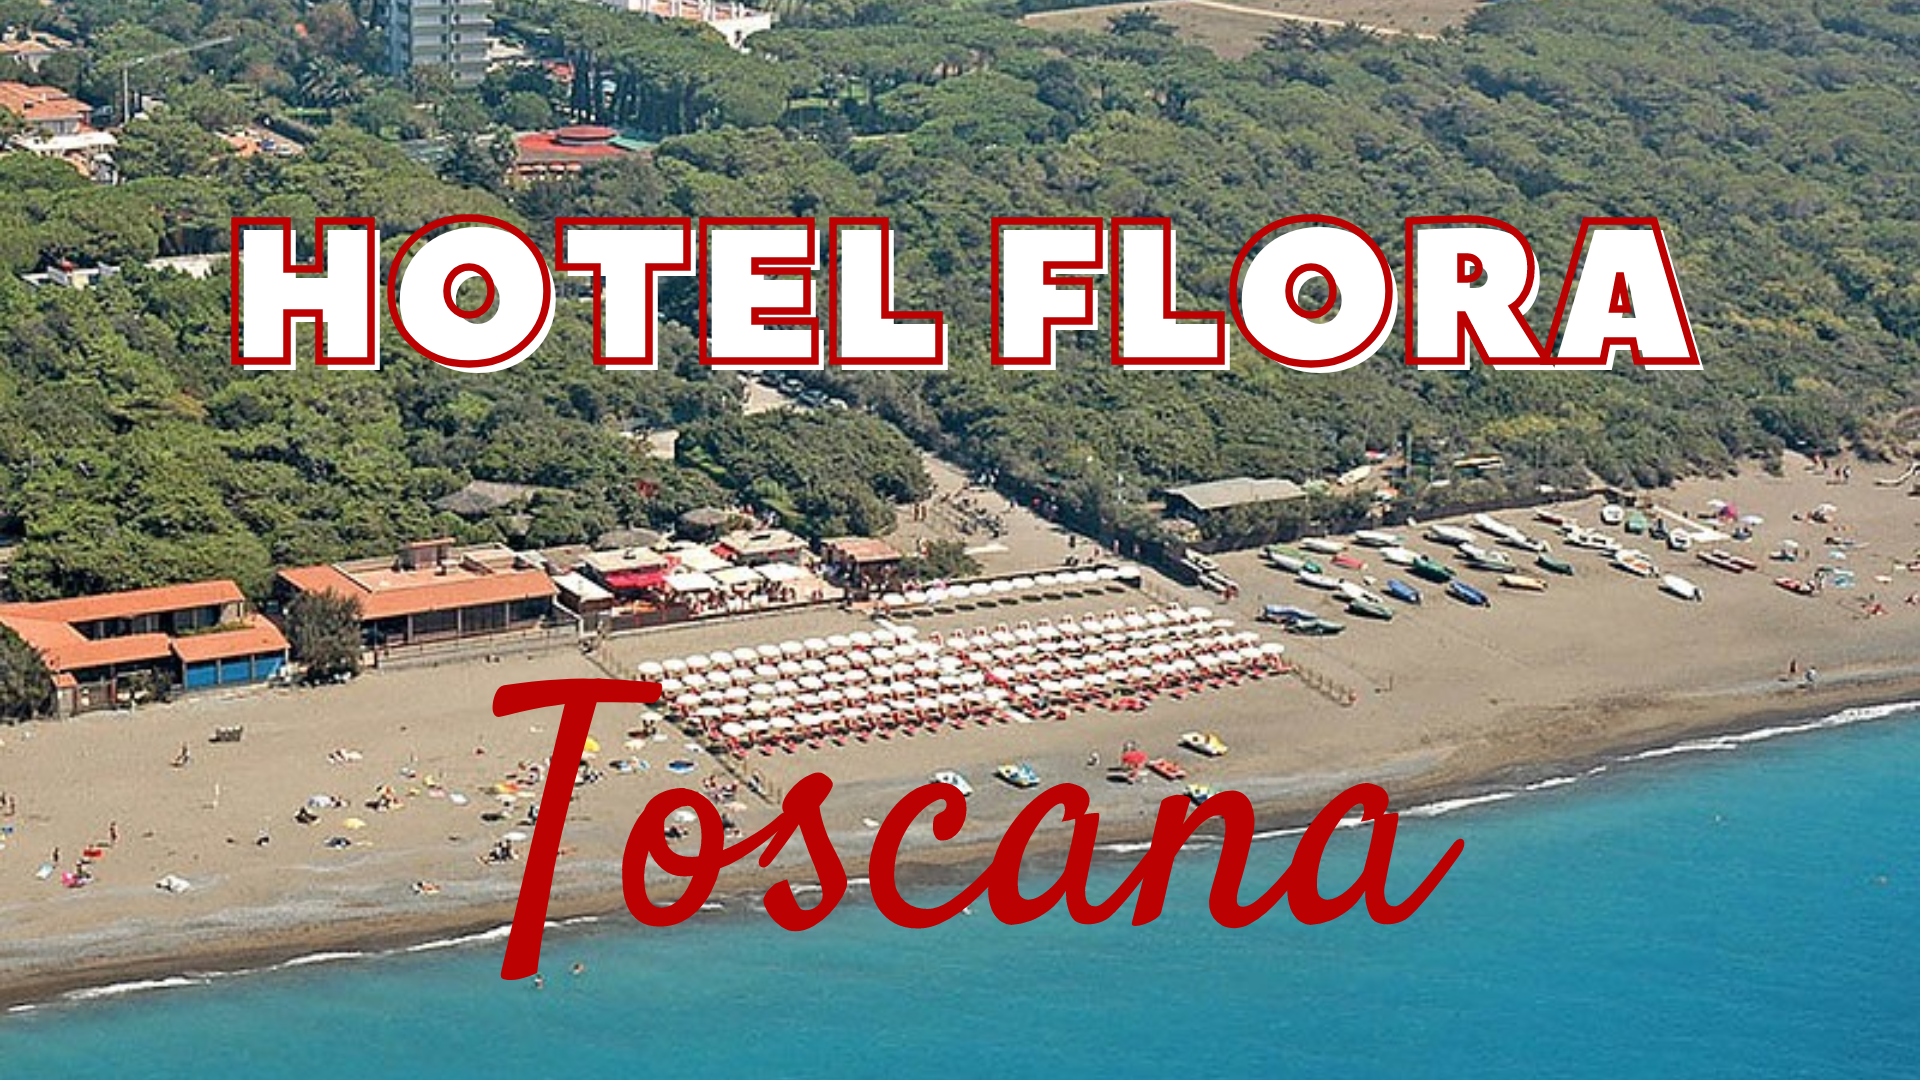 HOTEL FLORA - TOSCANA